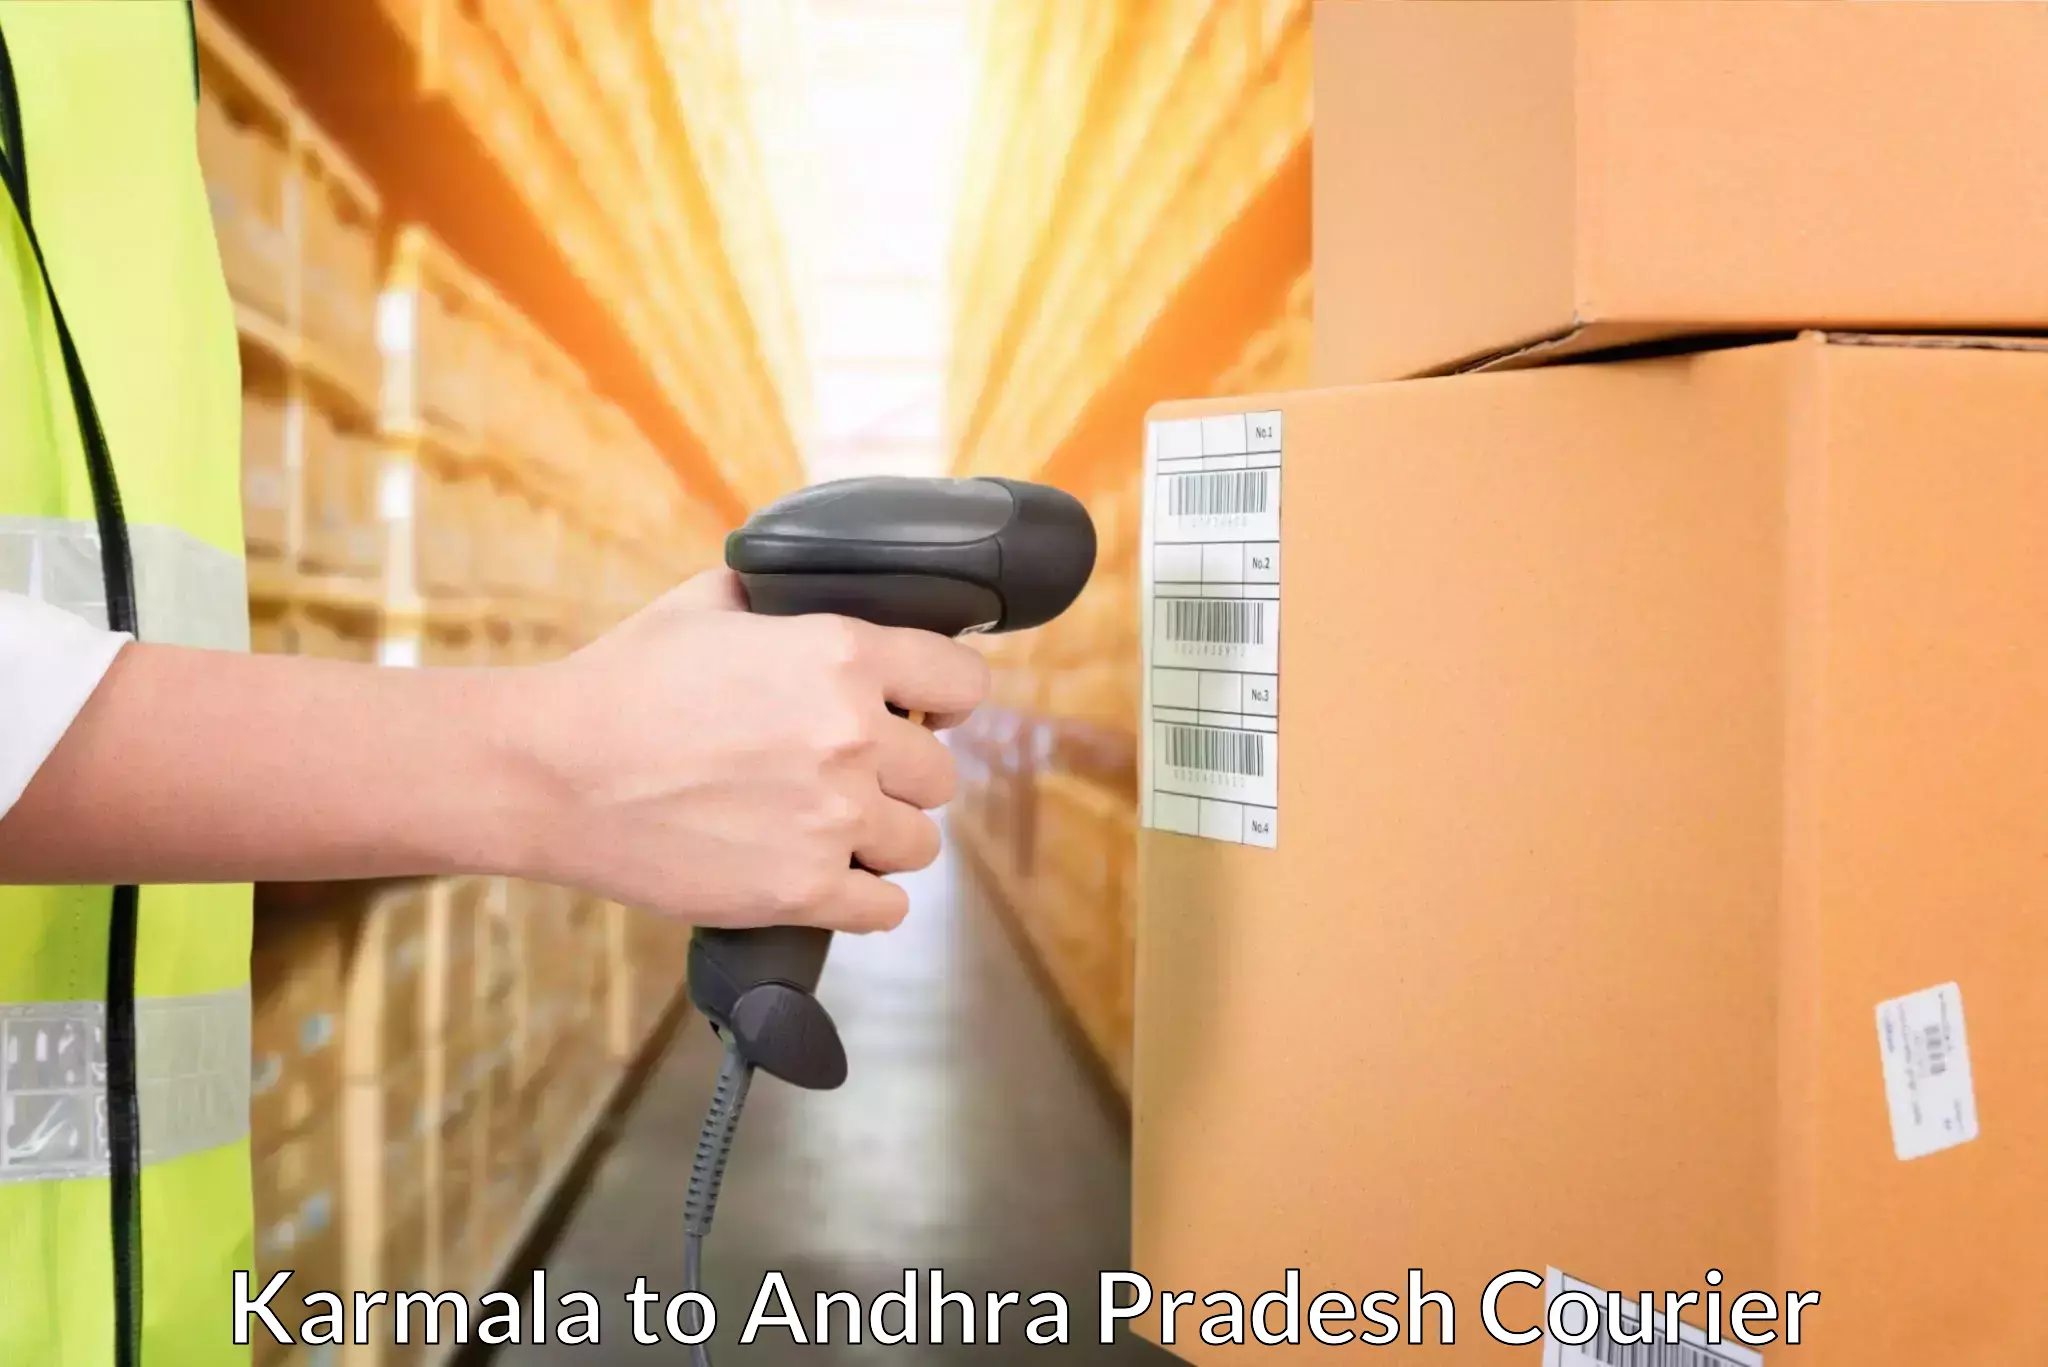 Courier service efficiency Karmala to Andhra Pradesh